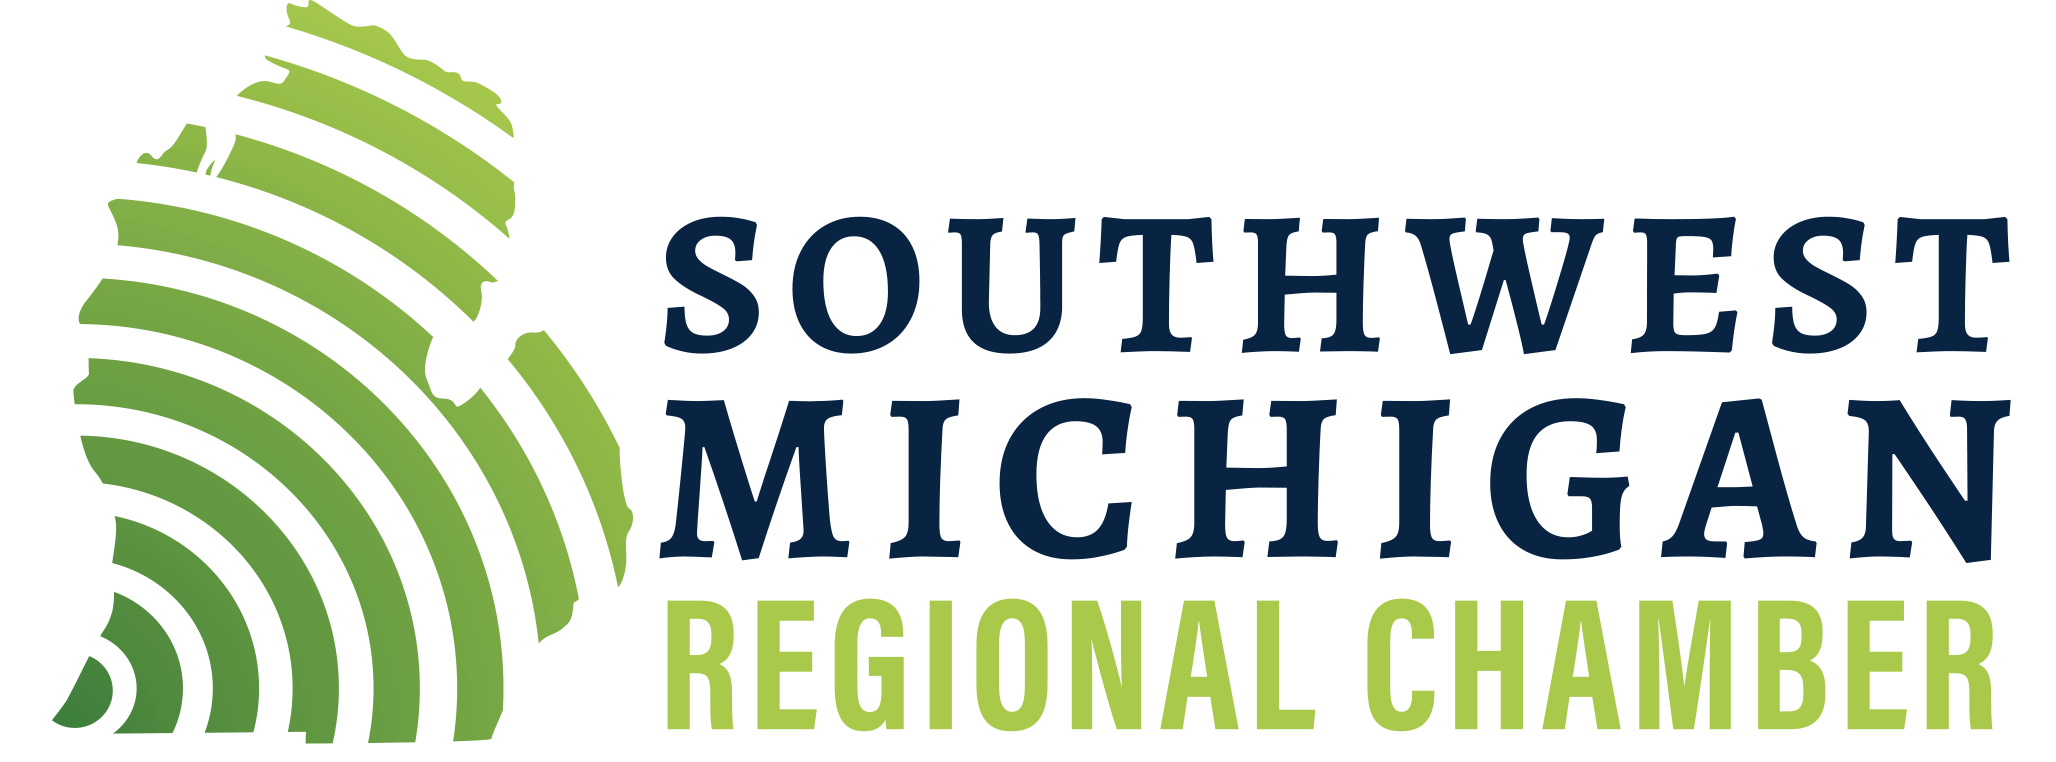 Southwest Michigan Regional Chamber